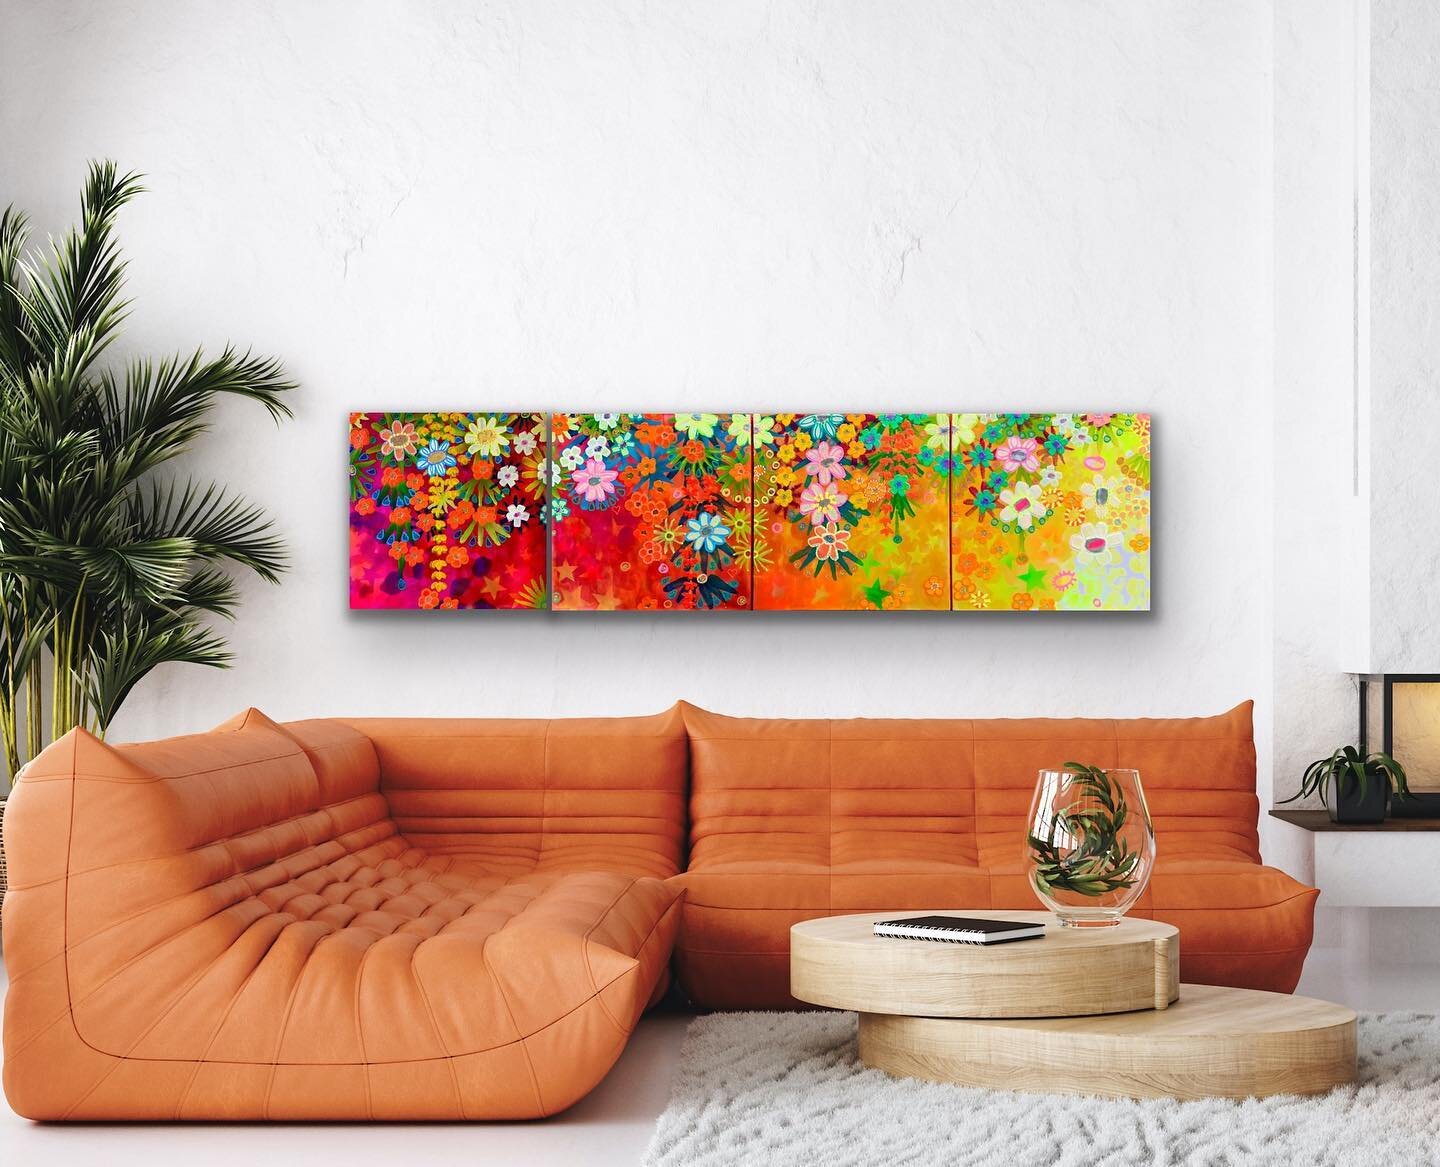 The series is growing. 🫣🌈🌸🎨 #contemporaryflowers #contemporaryencaustic #inspiredbyretro #
#contemporaryart #modernart #botanicalart #beeswaxpainting
#encausticartistuk #happinessispainting
#encausticartist #swainfo #encausticart #birminghamartis